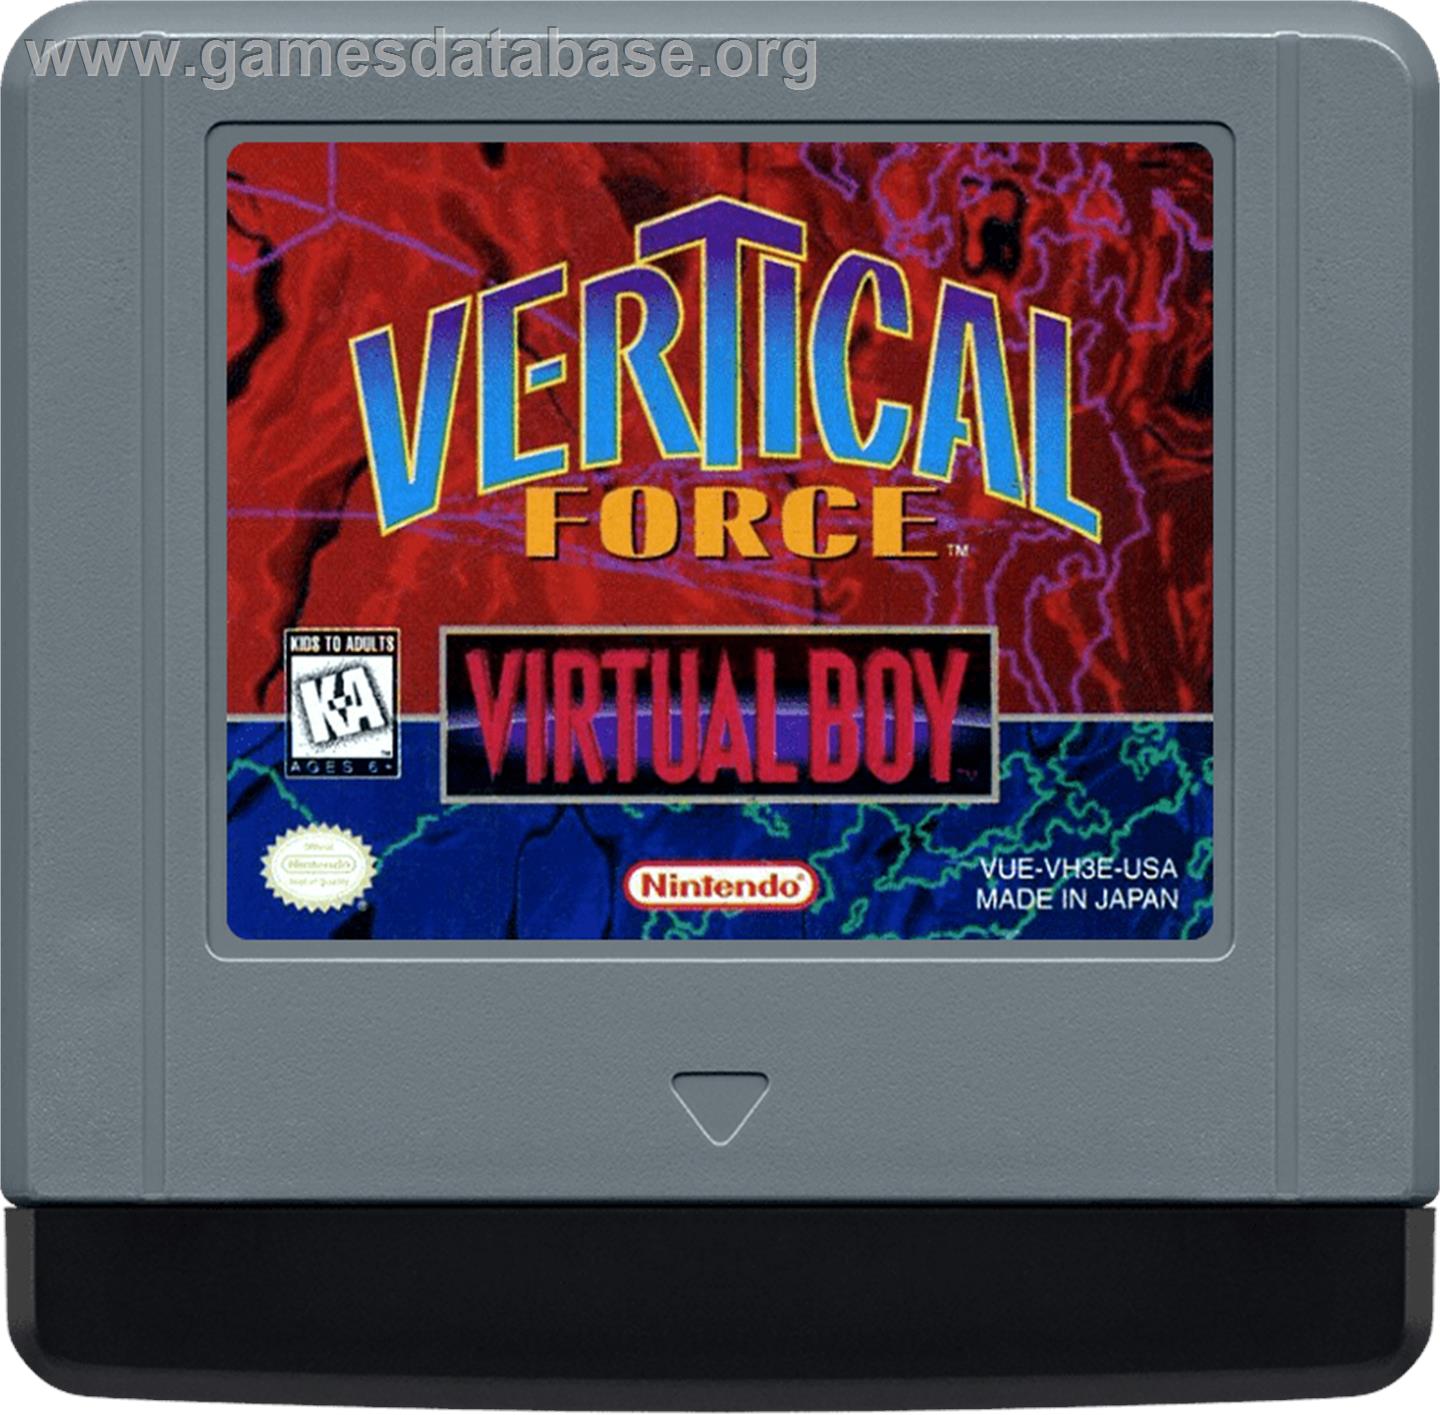 Vertical Force - Nintendo Virtual Boy - Artwork - Cartridge